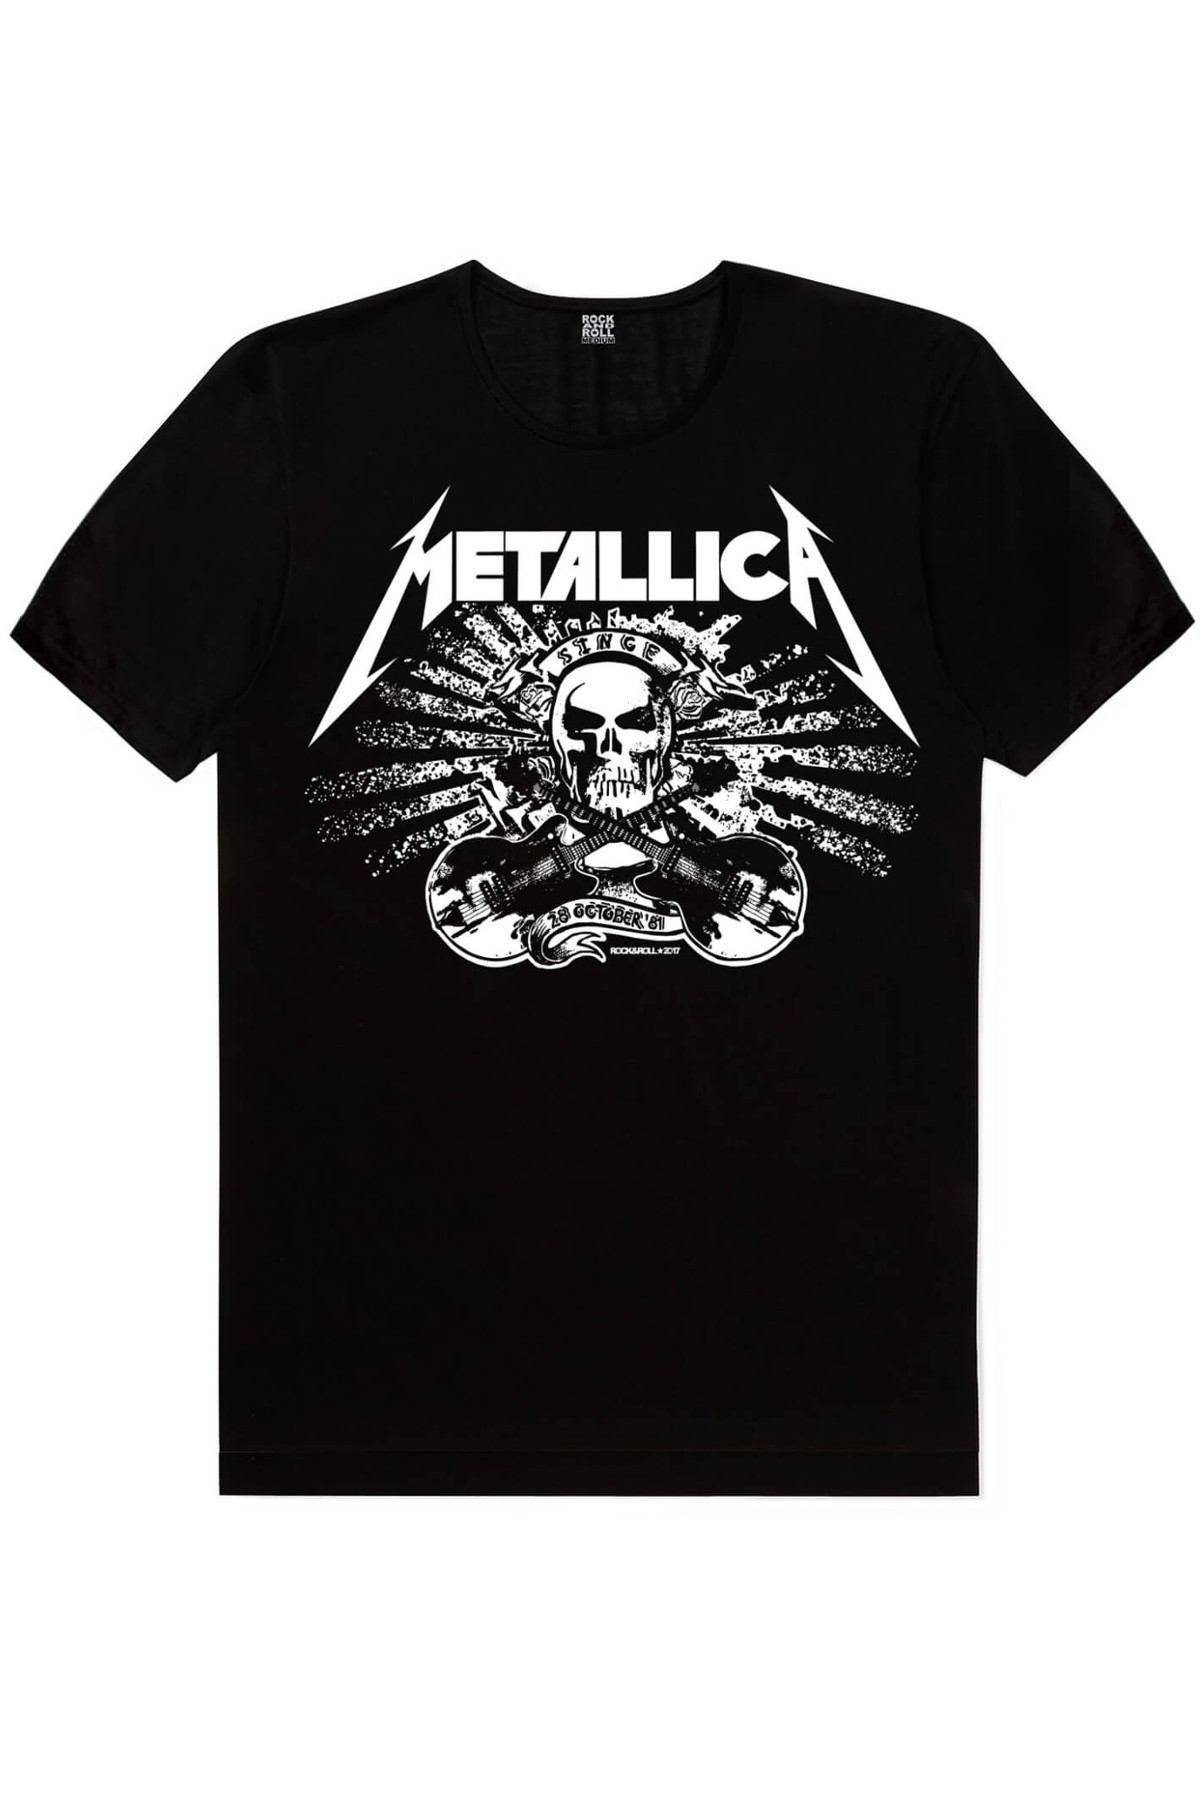 Geometrik Geyik, Metallica Kurukafa Kadın 2'li Eko Paket T-shirt